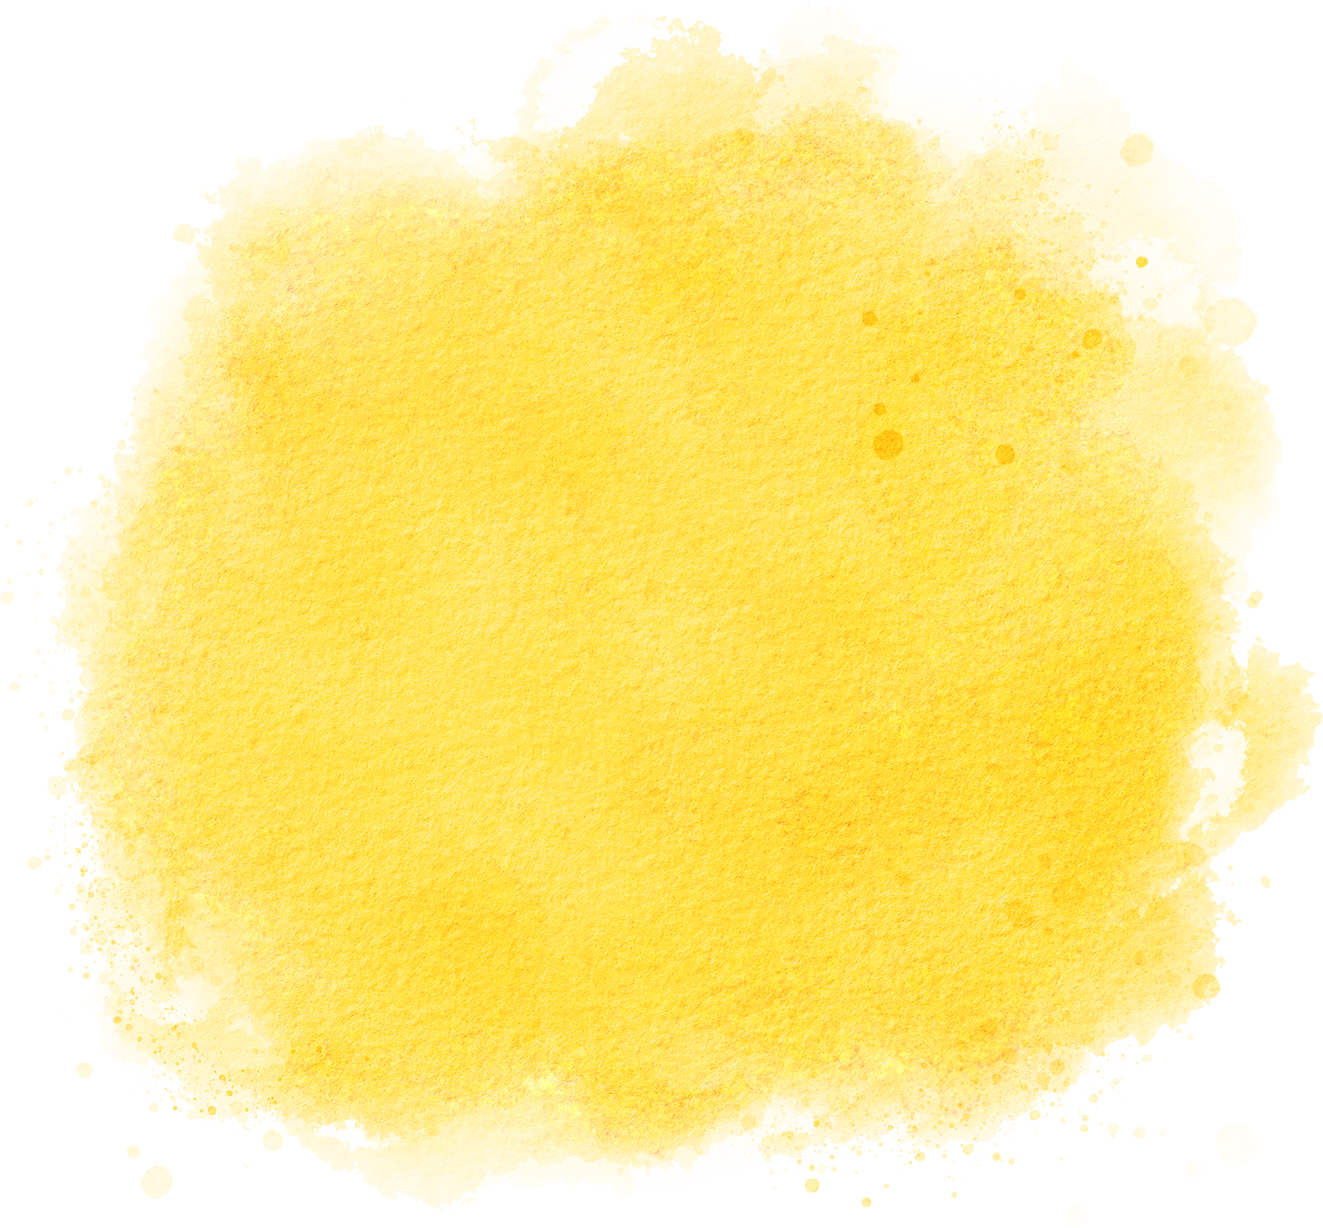 Bright Yellow Splash Watercolor Paint